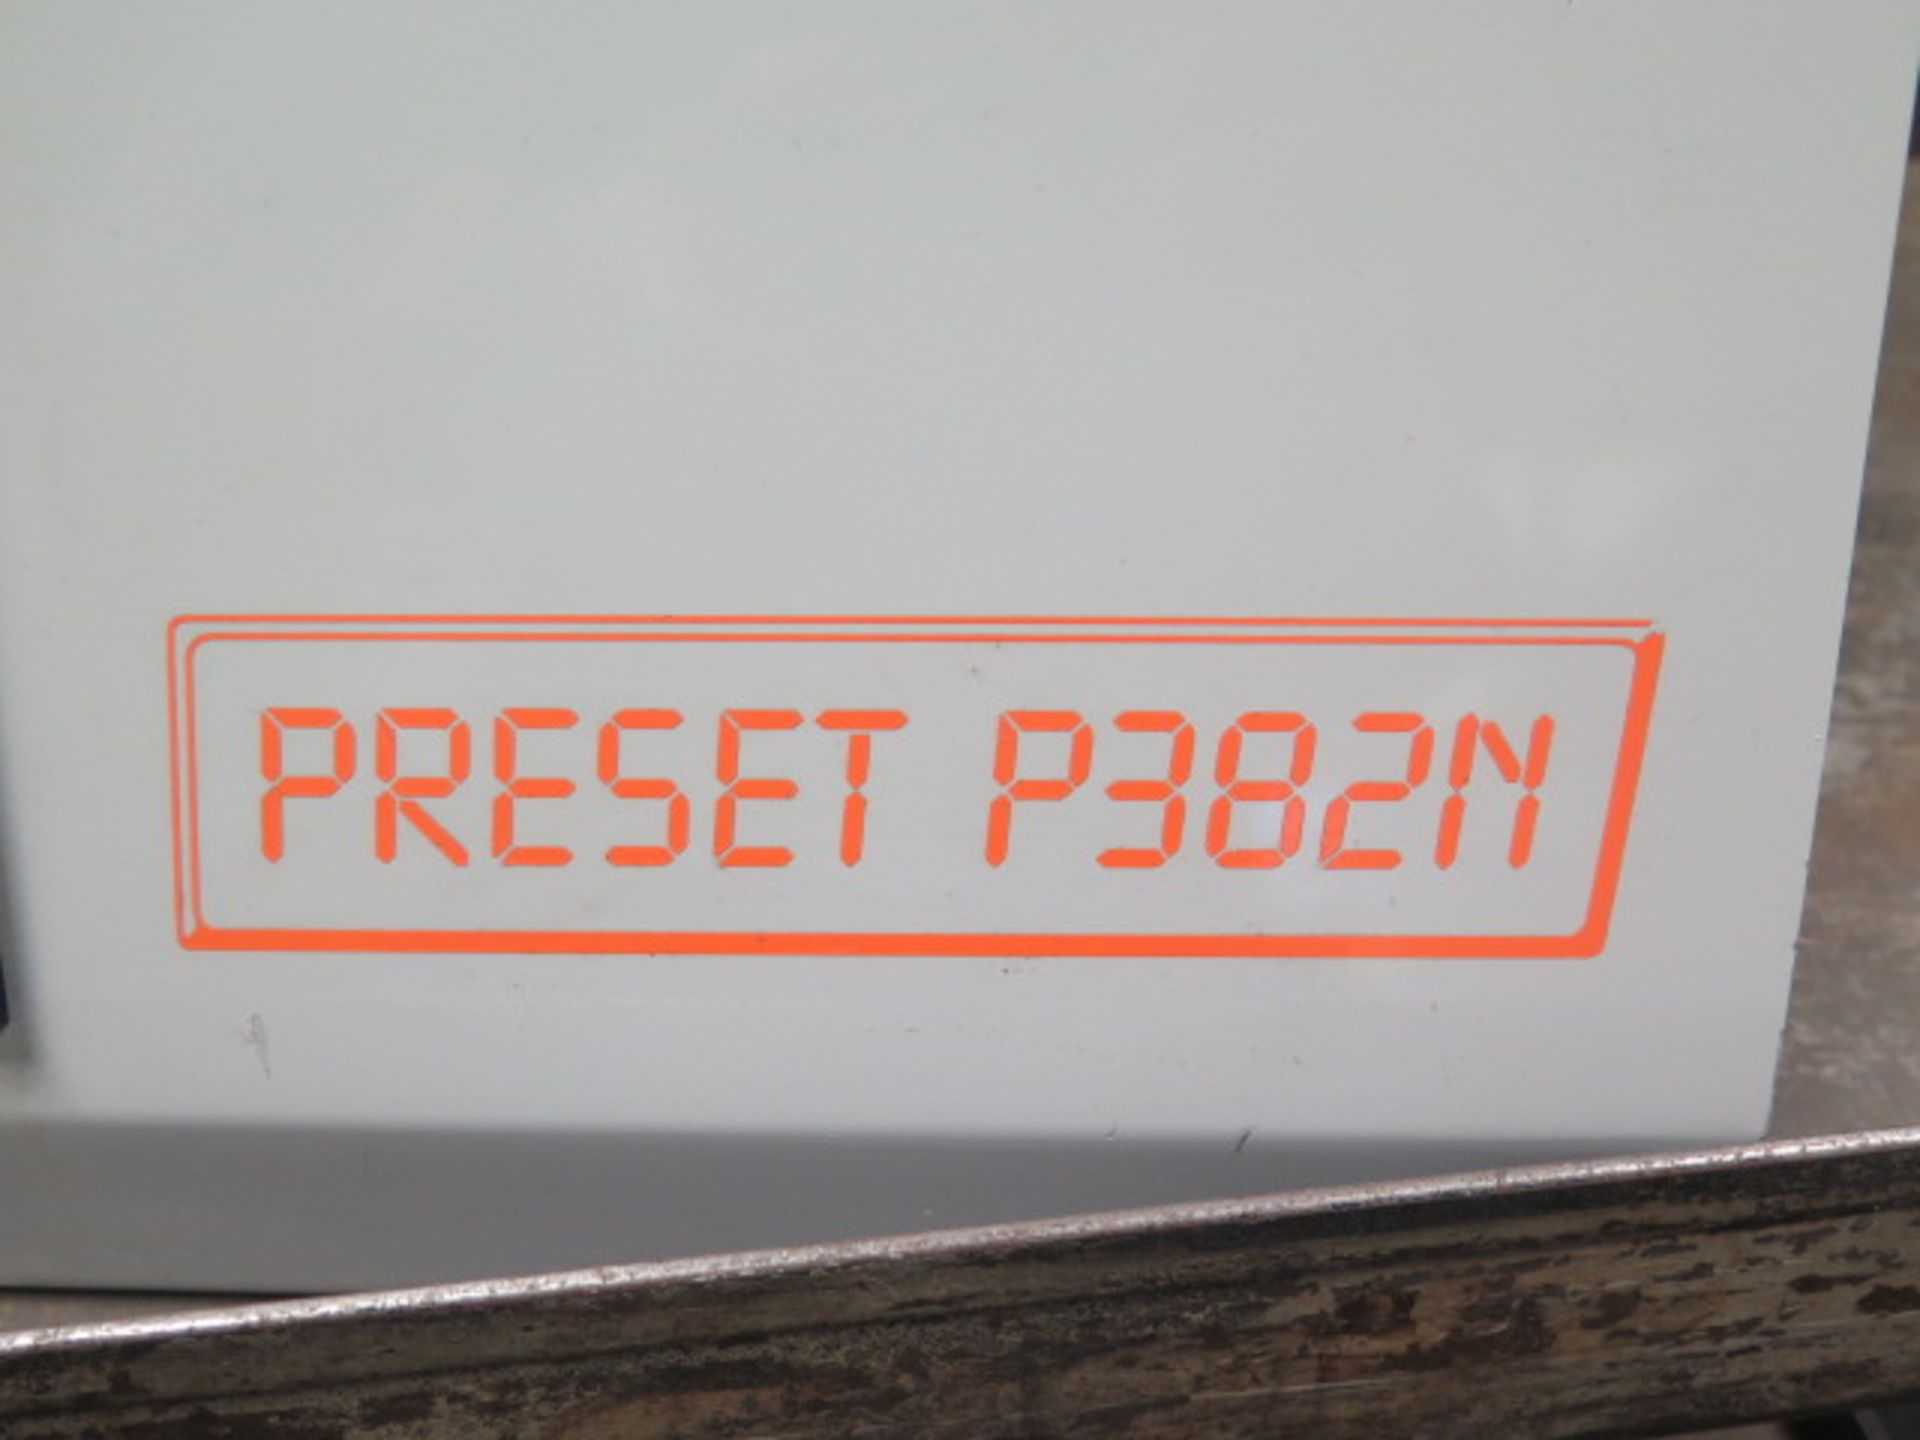 2005 Dorian "Preset P382M" 40-Taper Tool Presetter s/n P0655 w/ Digital Controls (SOLD AS-IS - NO - Image 9 of 11